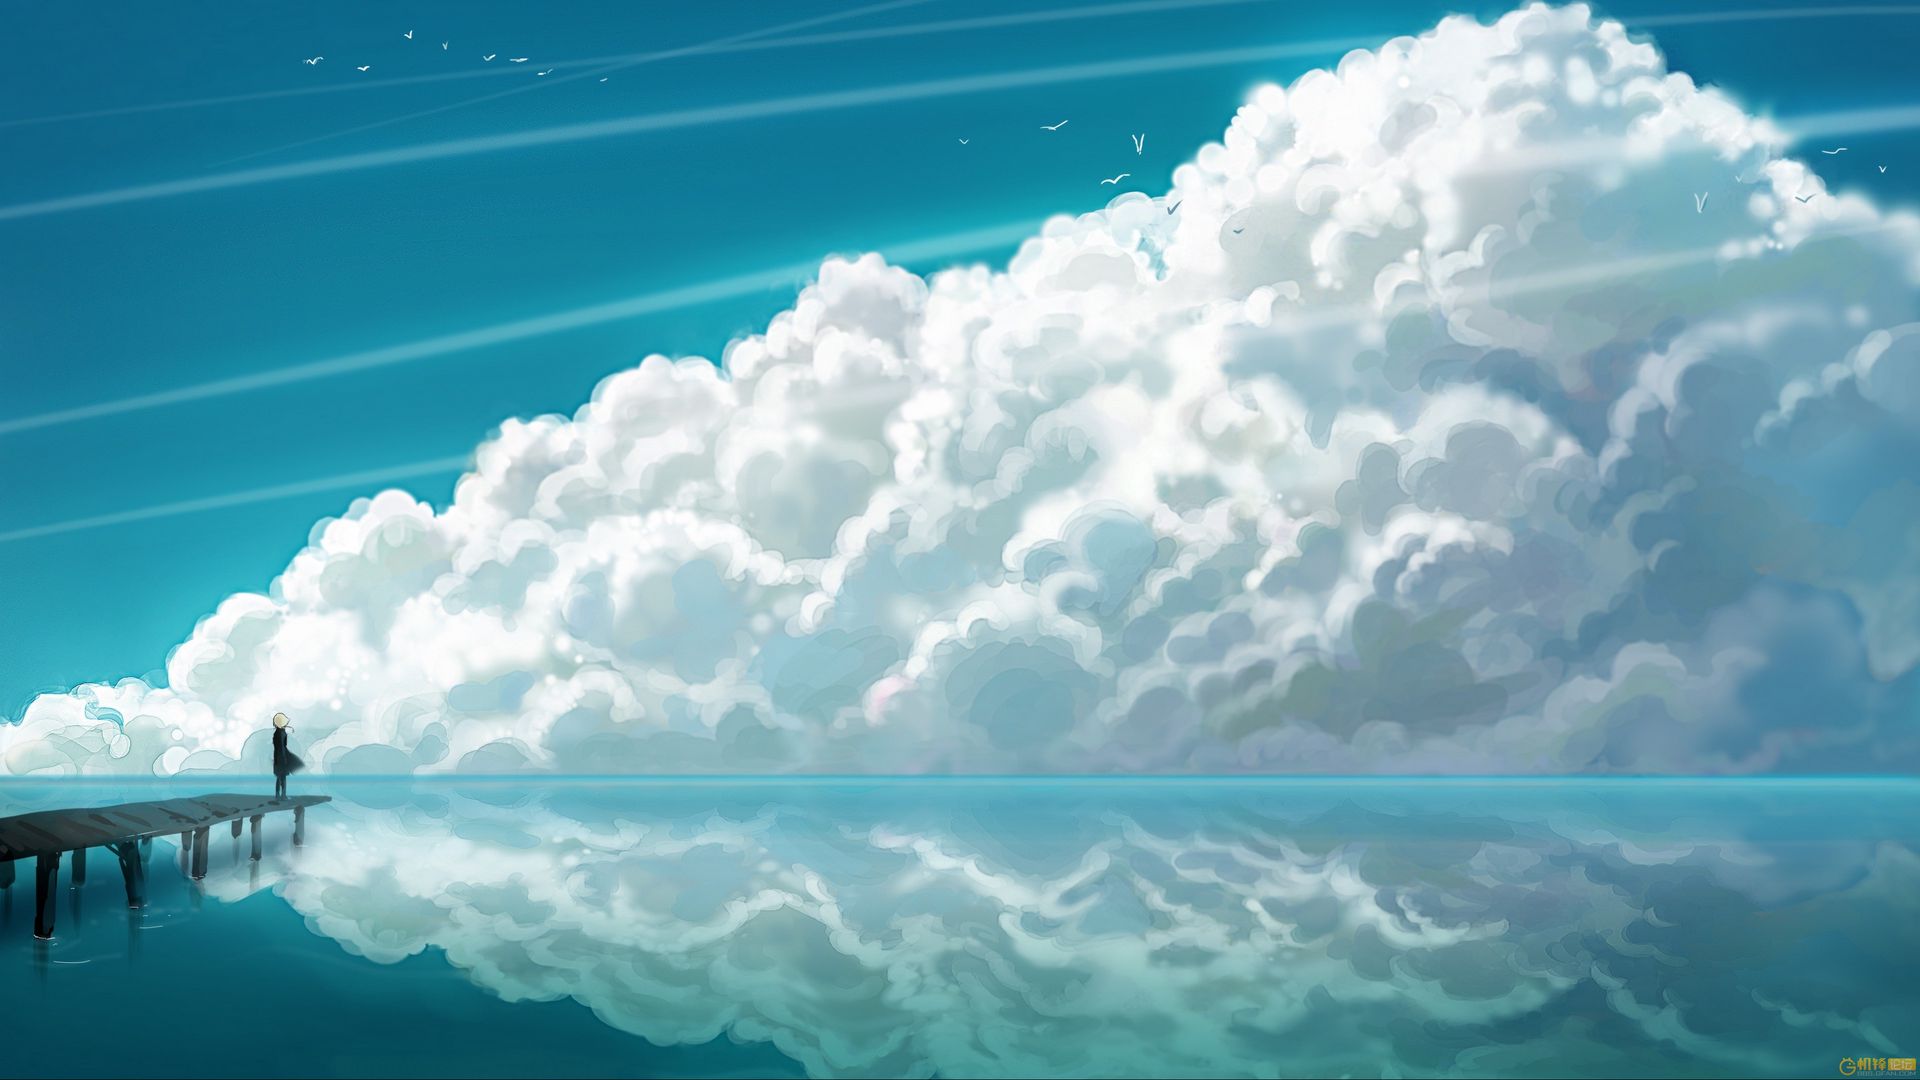 Download wallpaper 1920x1080 clouds, sky, bridge, people, reflection ...